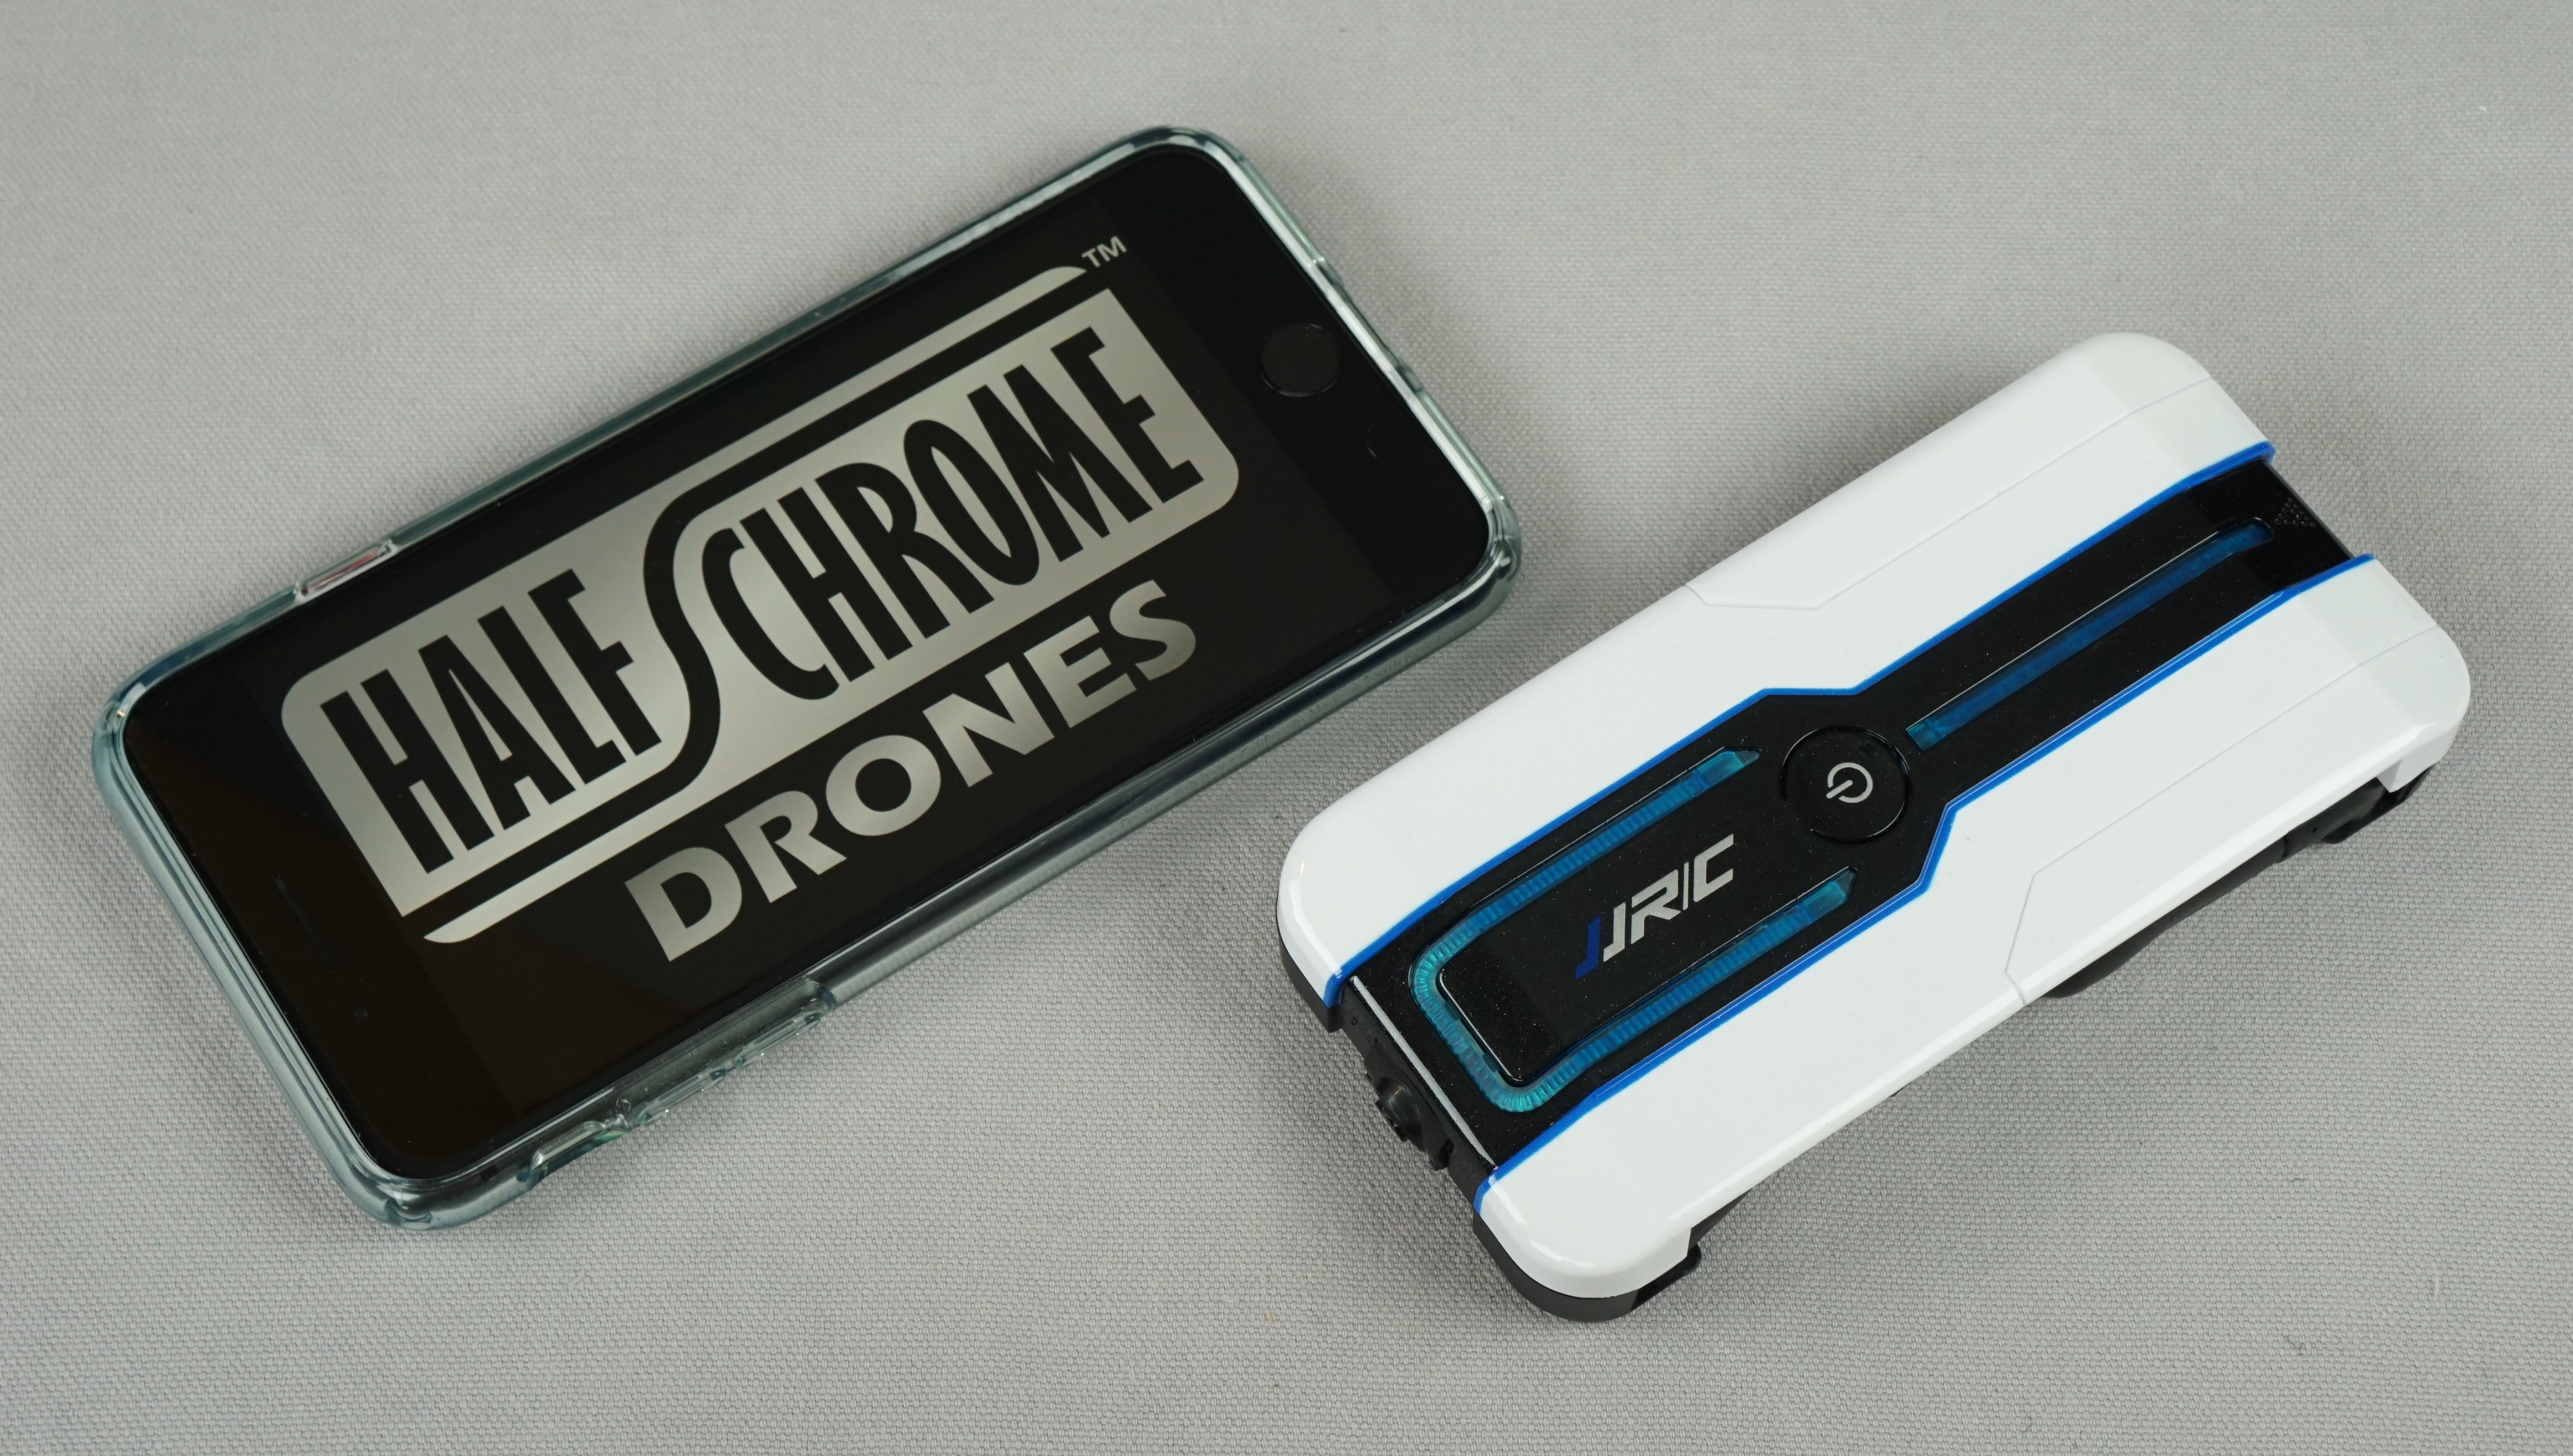 JJRC Spotlight drone